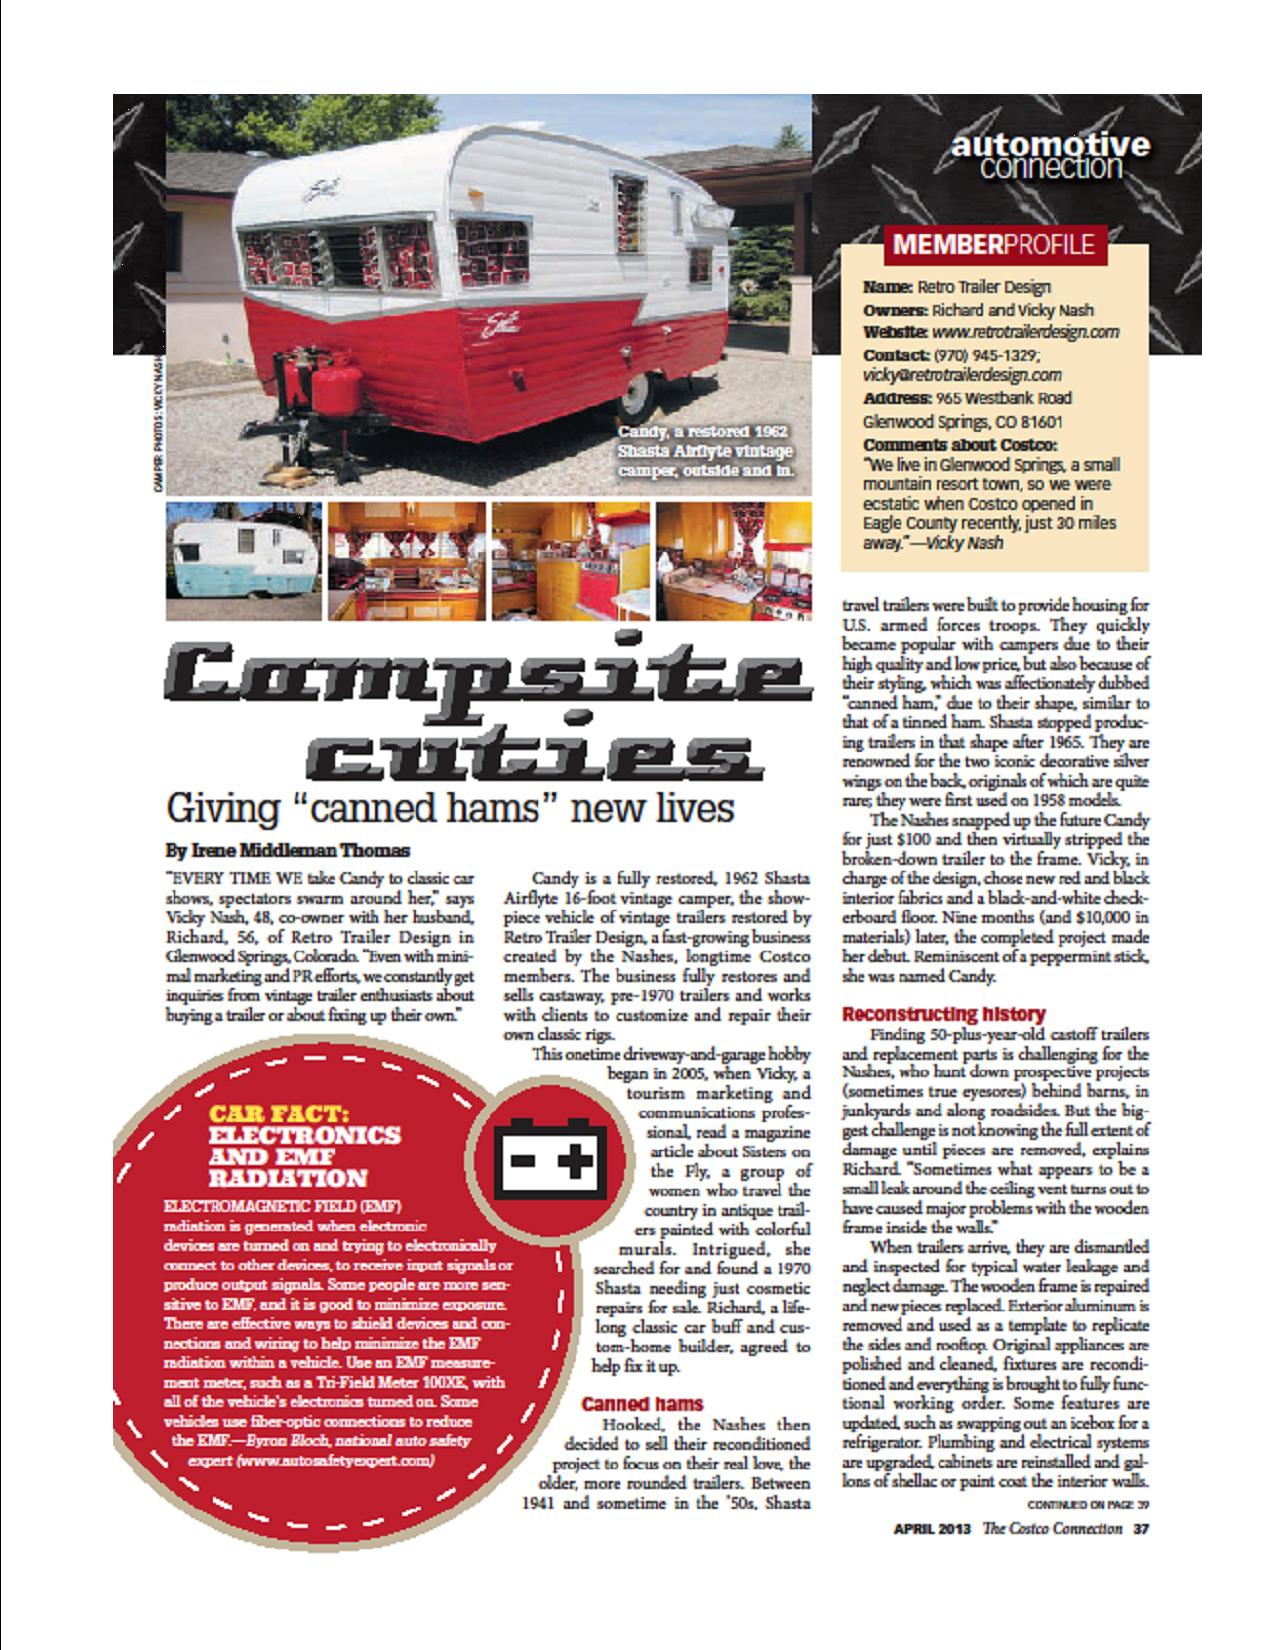 Costco Connection magazine features Retro Trailer Design in the April 2013 issue